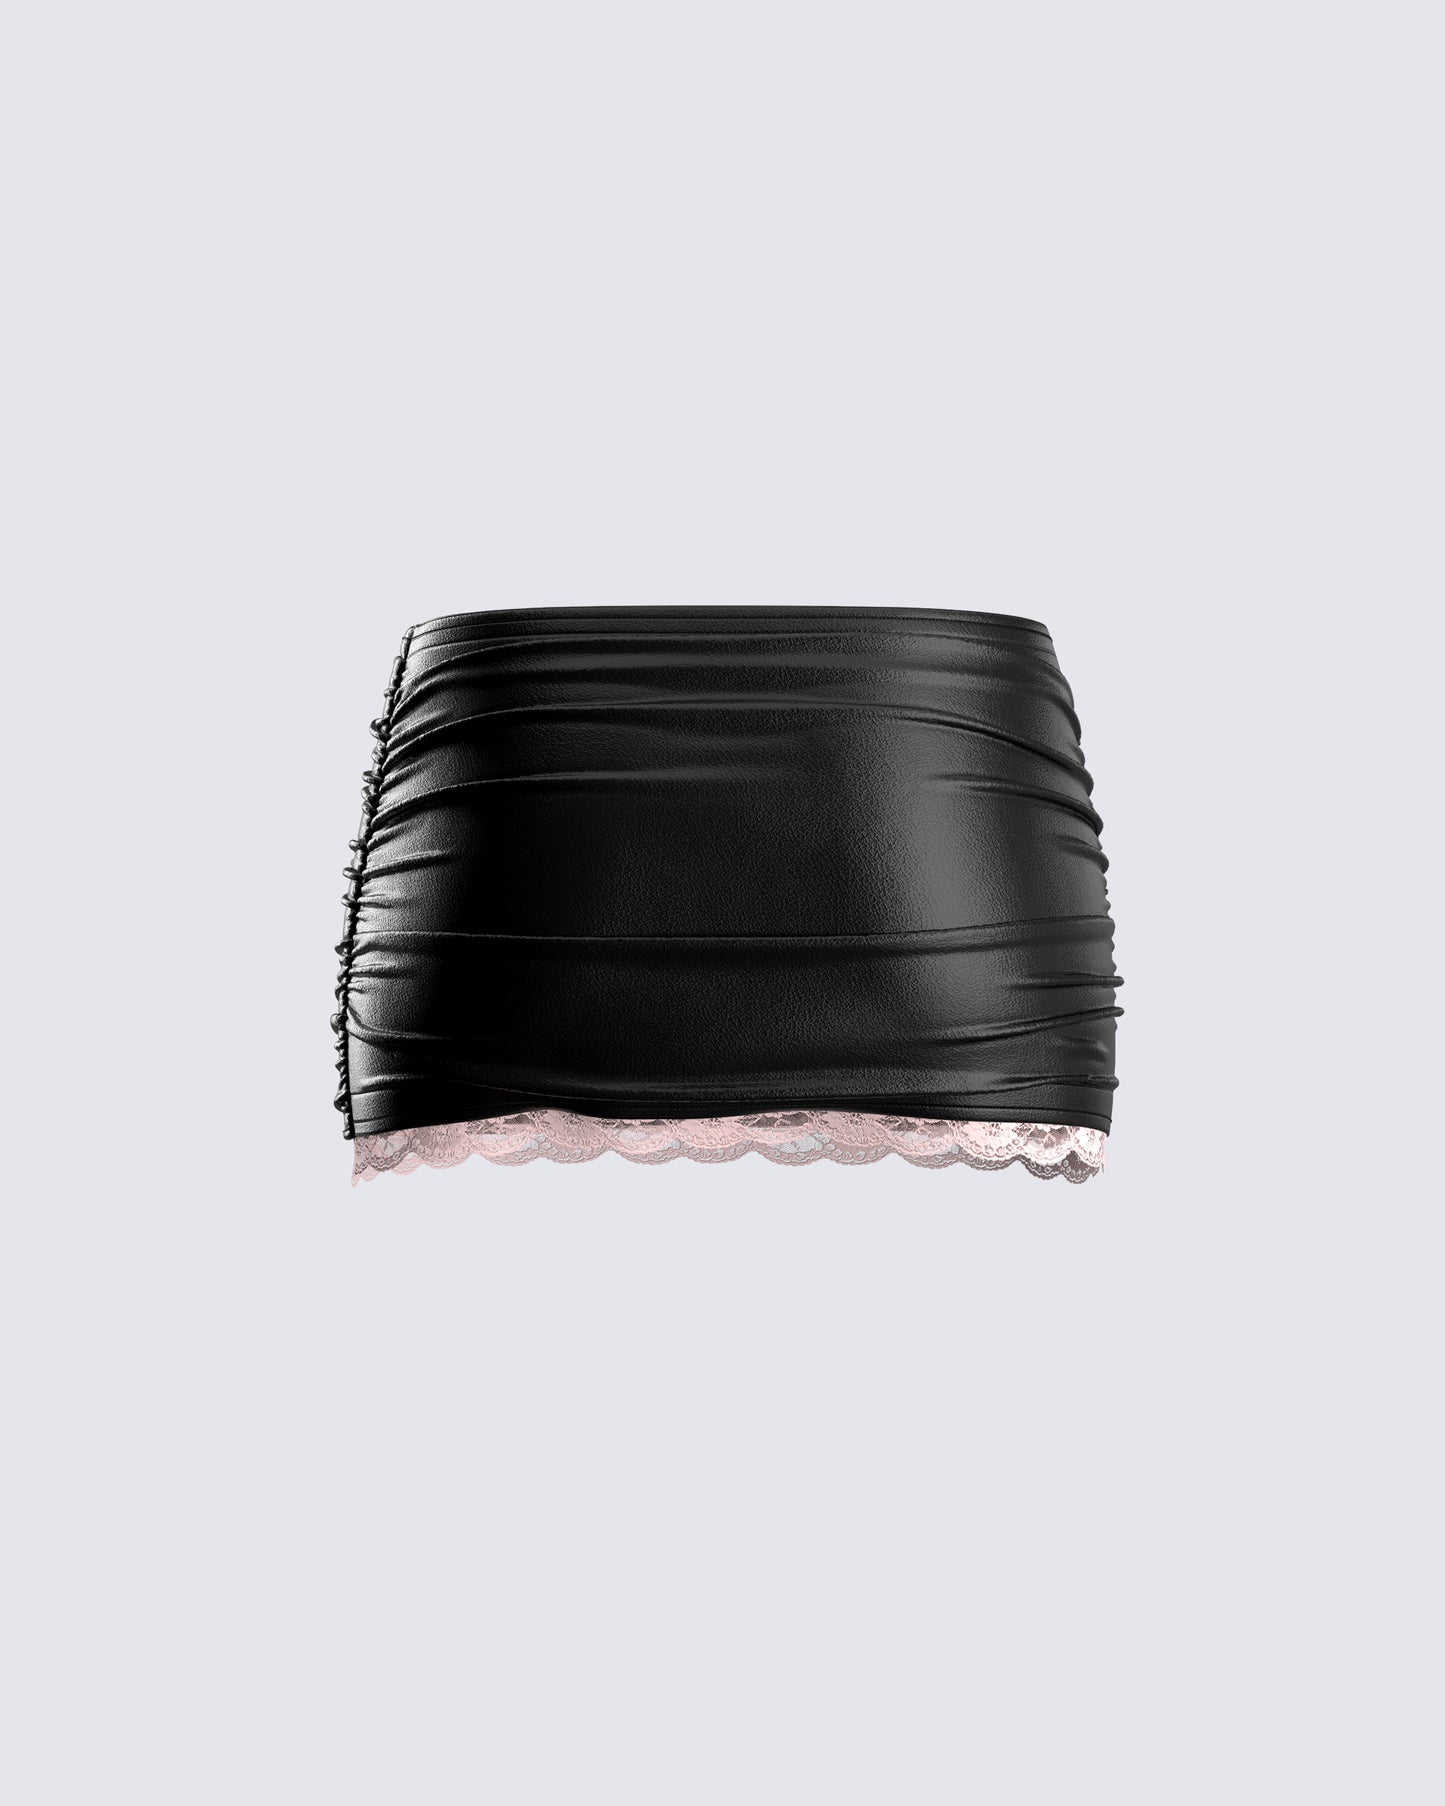 Sillaro Vegan Leather Pencil Skirt - Black